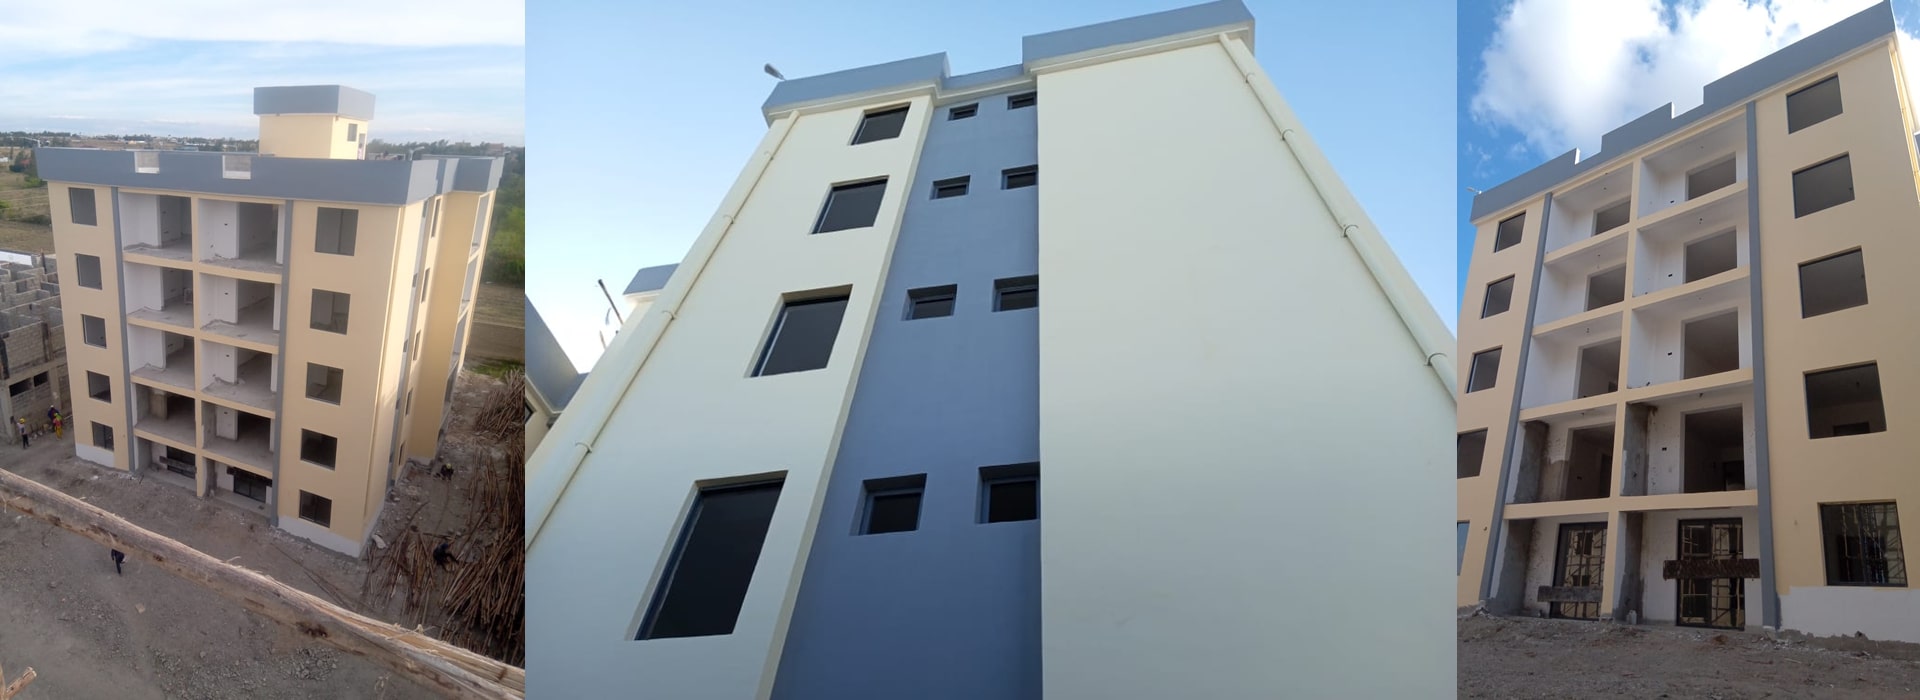 Terian Homes -Kitengela- Affordable apartments3